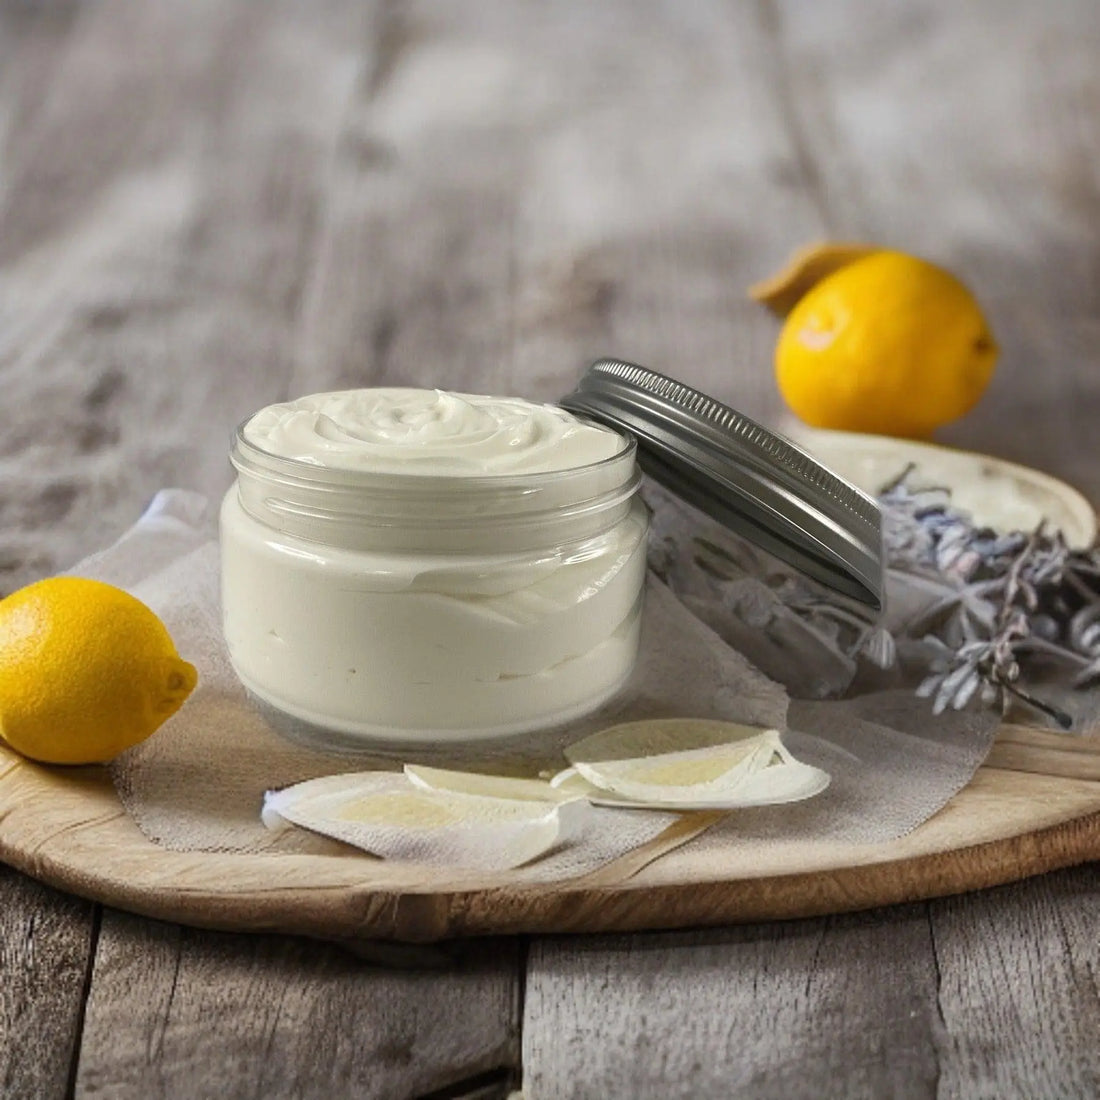 Lemon Lavender Moisturizing Shea Butter Body Butter 8oz - Kinky Lavender Soap Co.